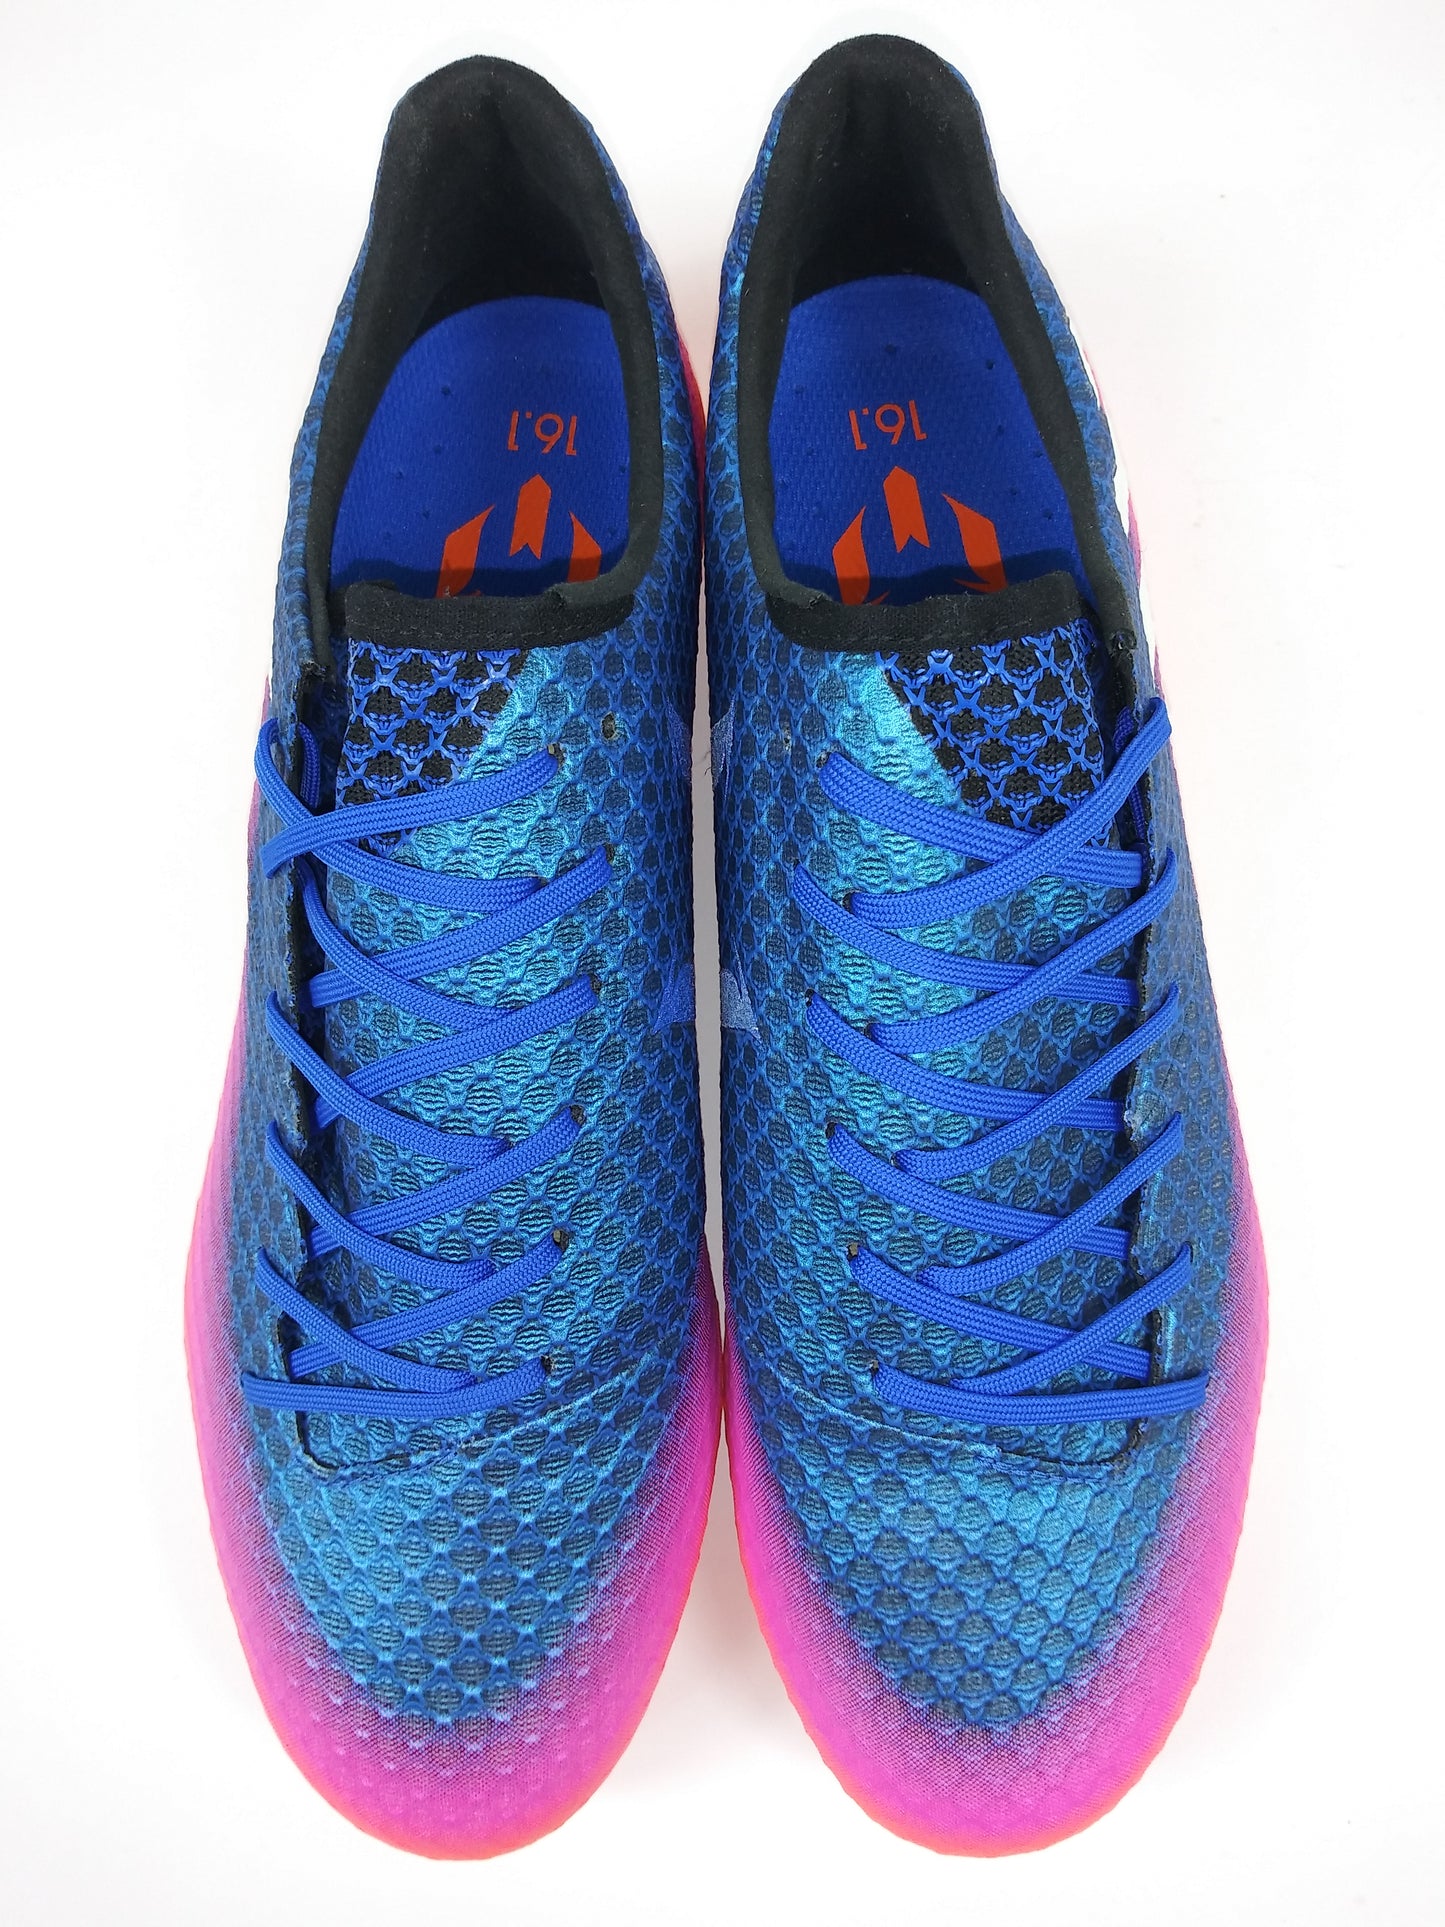 Adidas Messi 16.1 FG Blue Pink